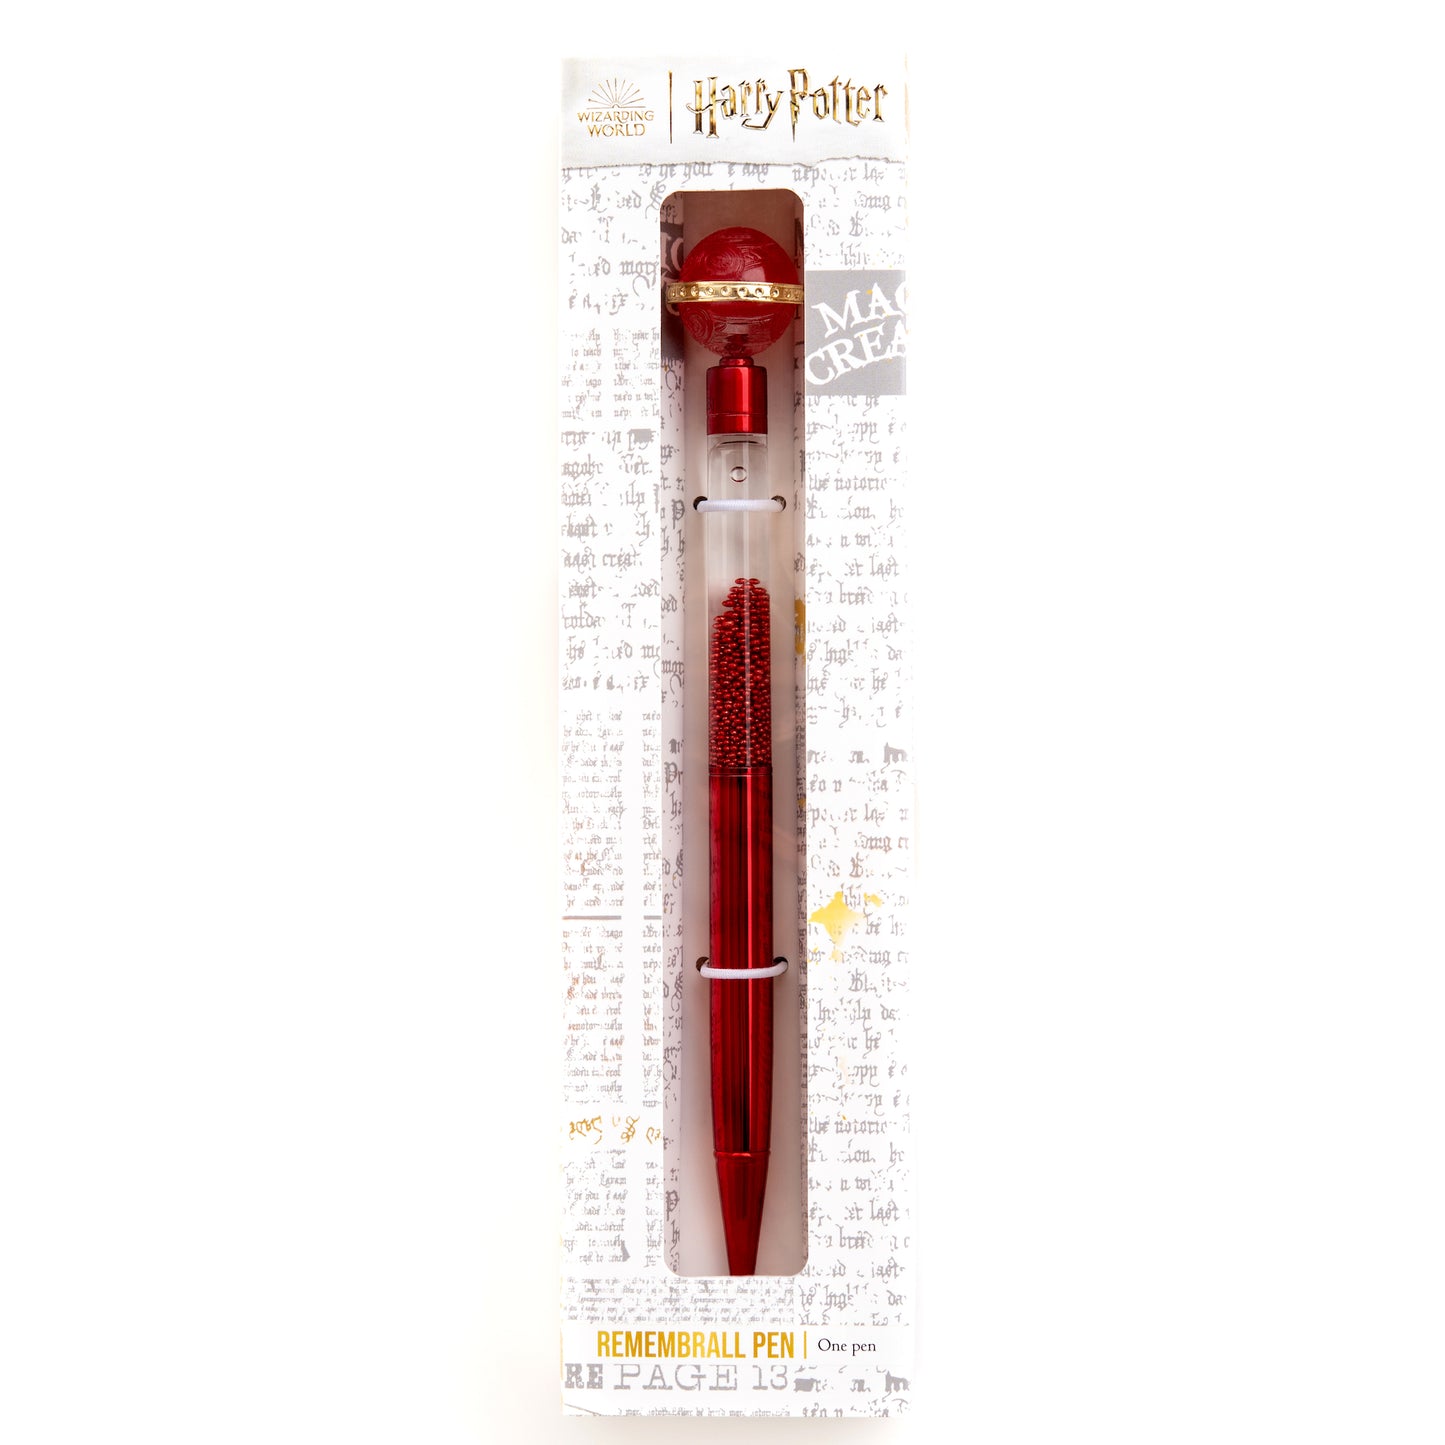 Harry Potter Remembrall Pen